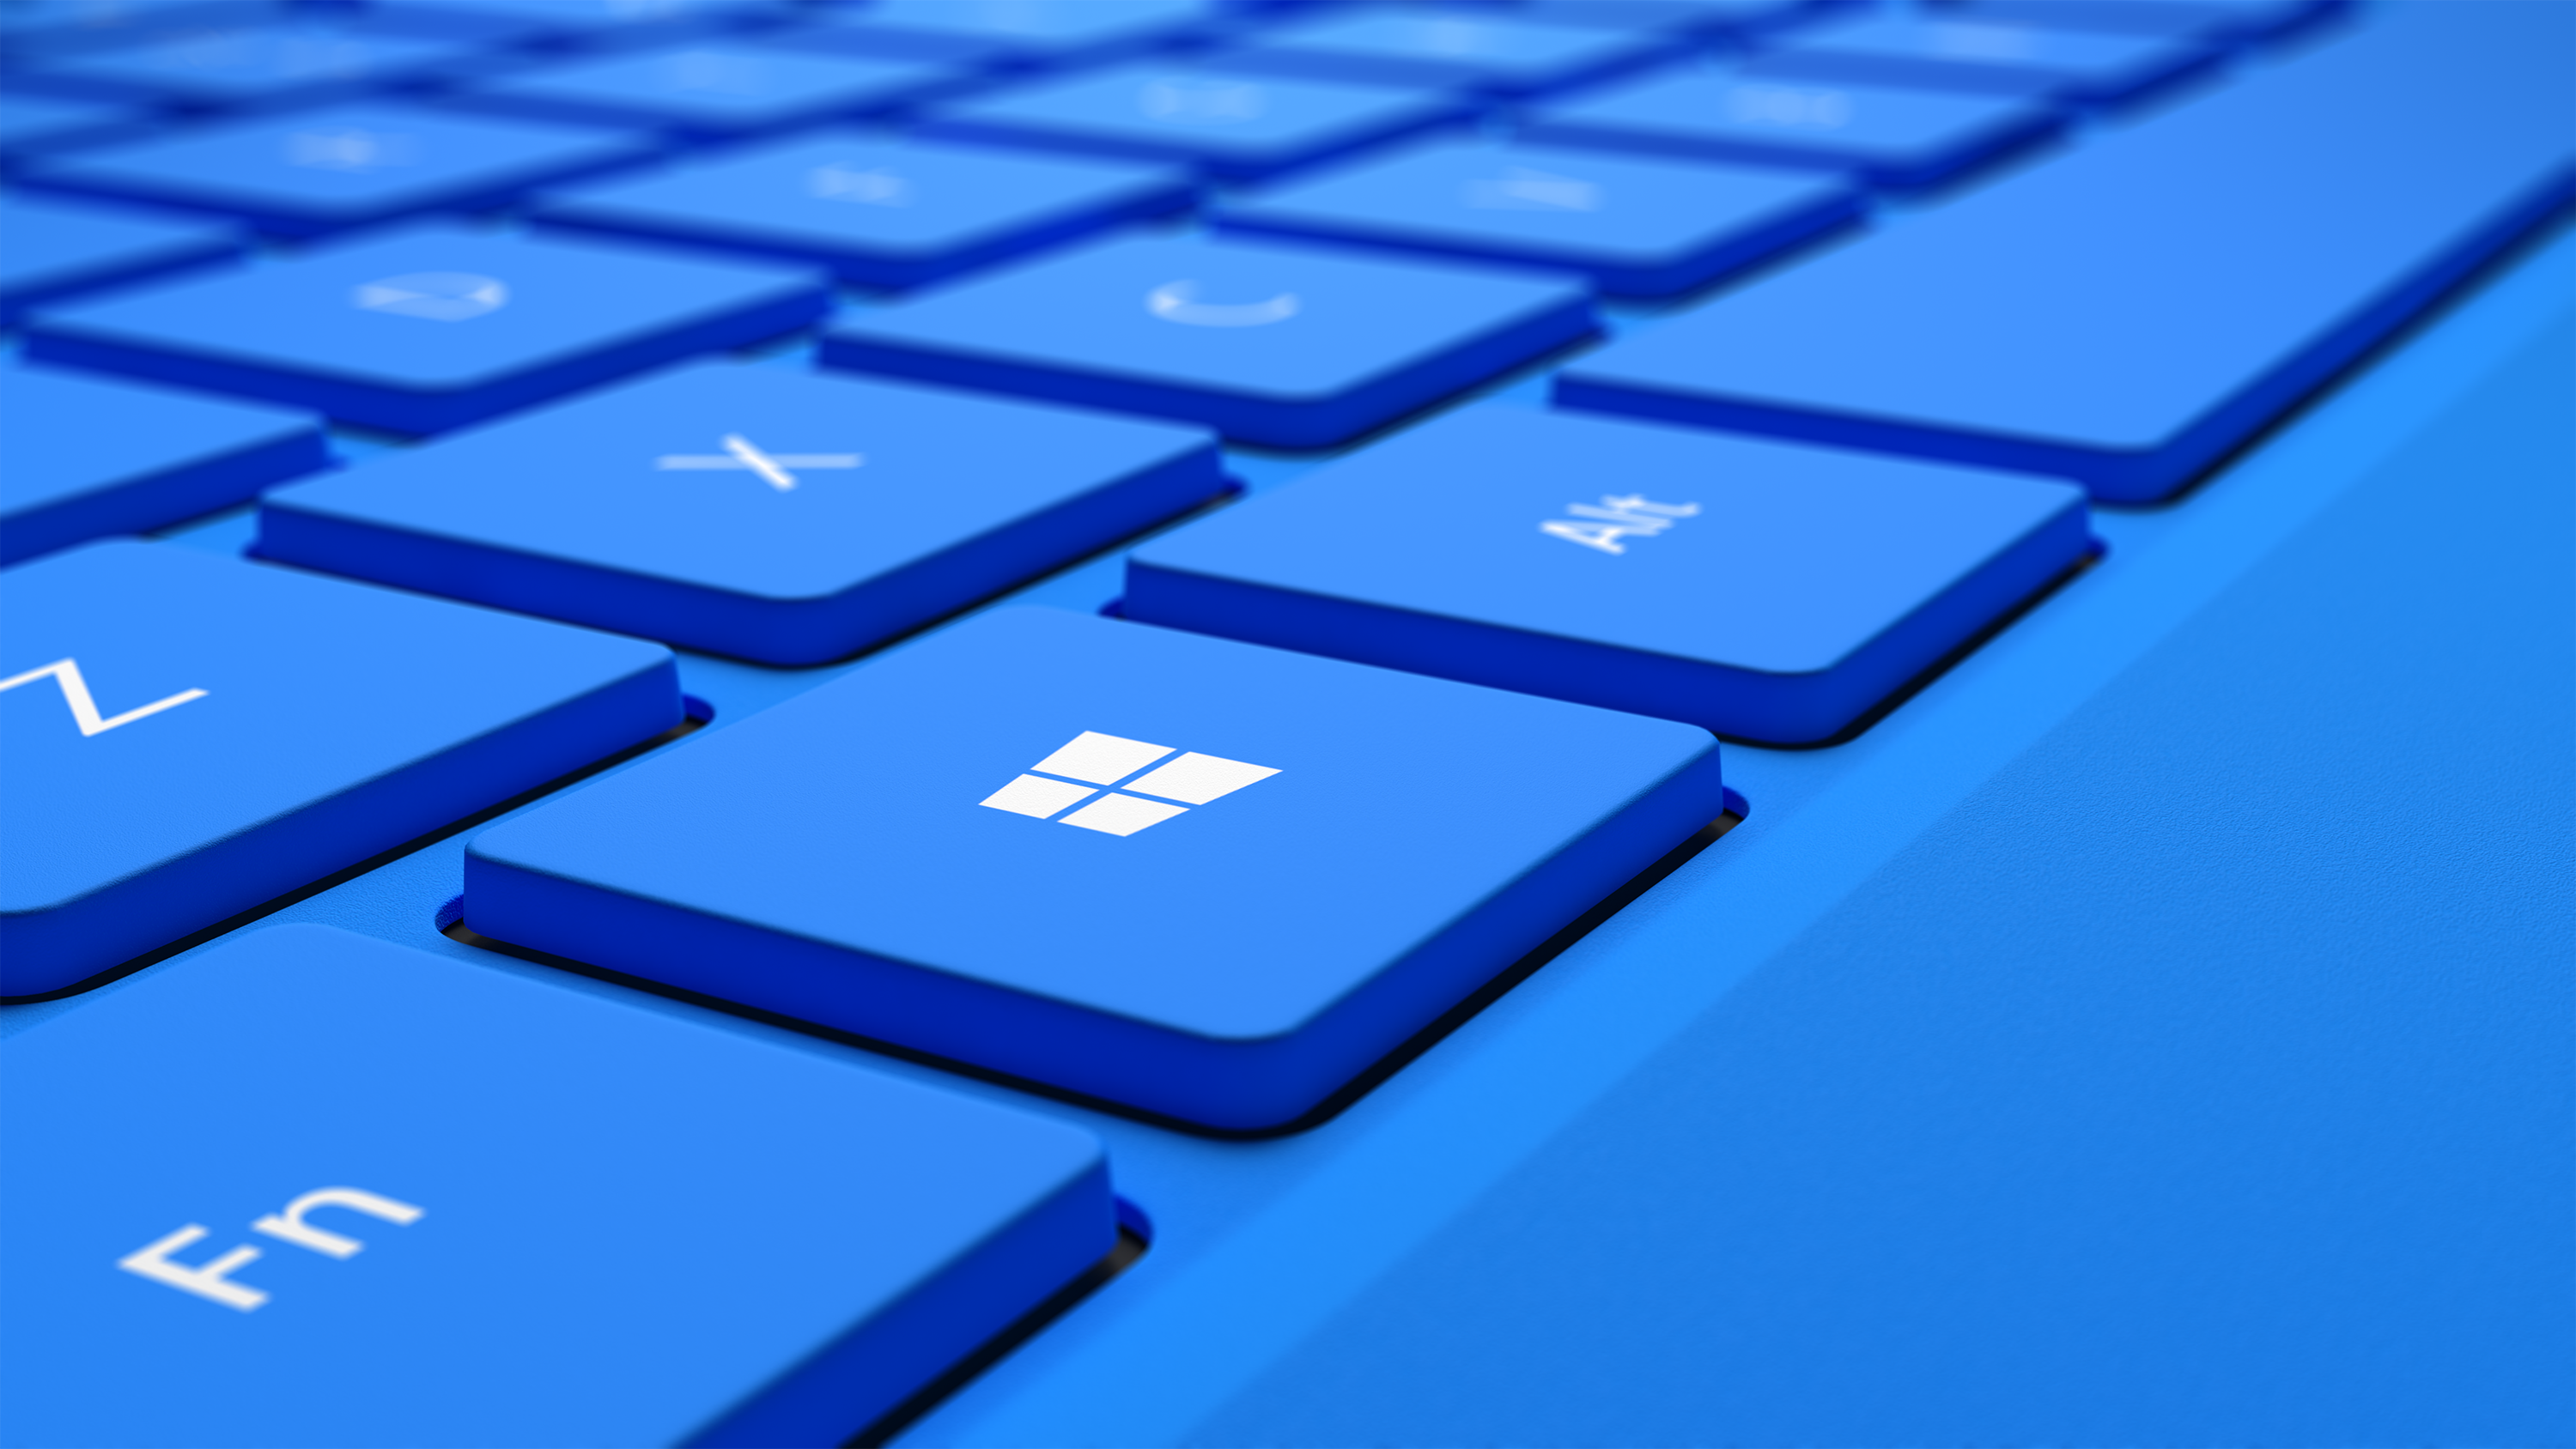 A blue Microsoft Surface keyboard